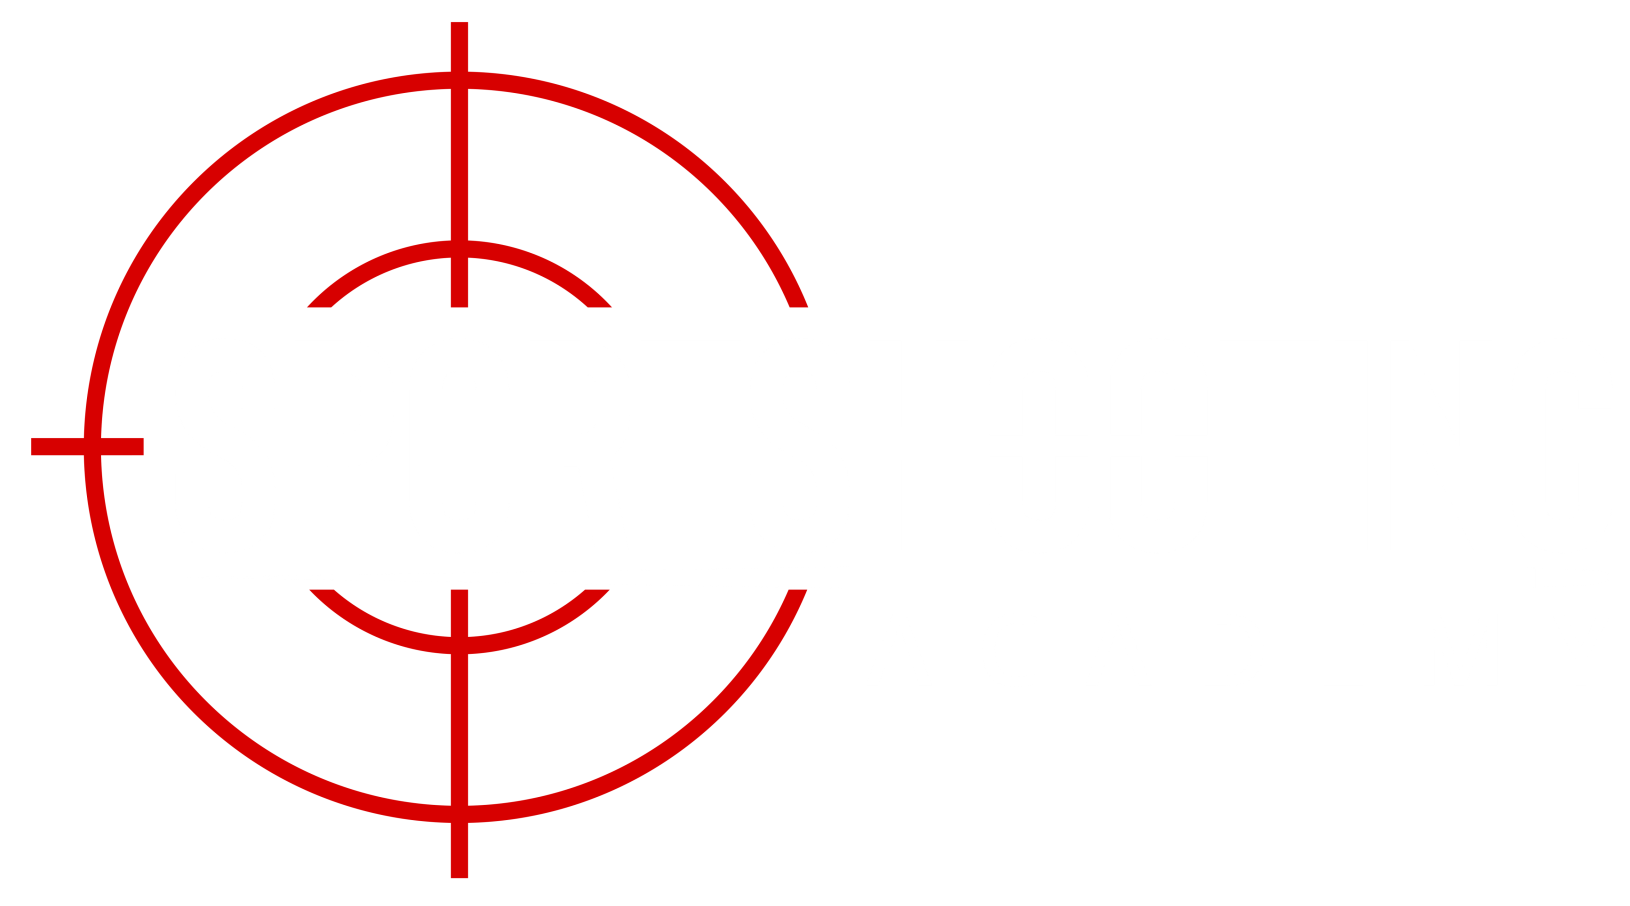 Sportshooting Academy